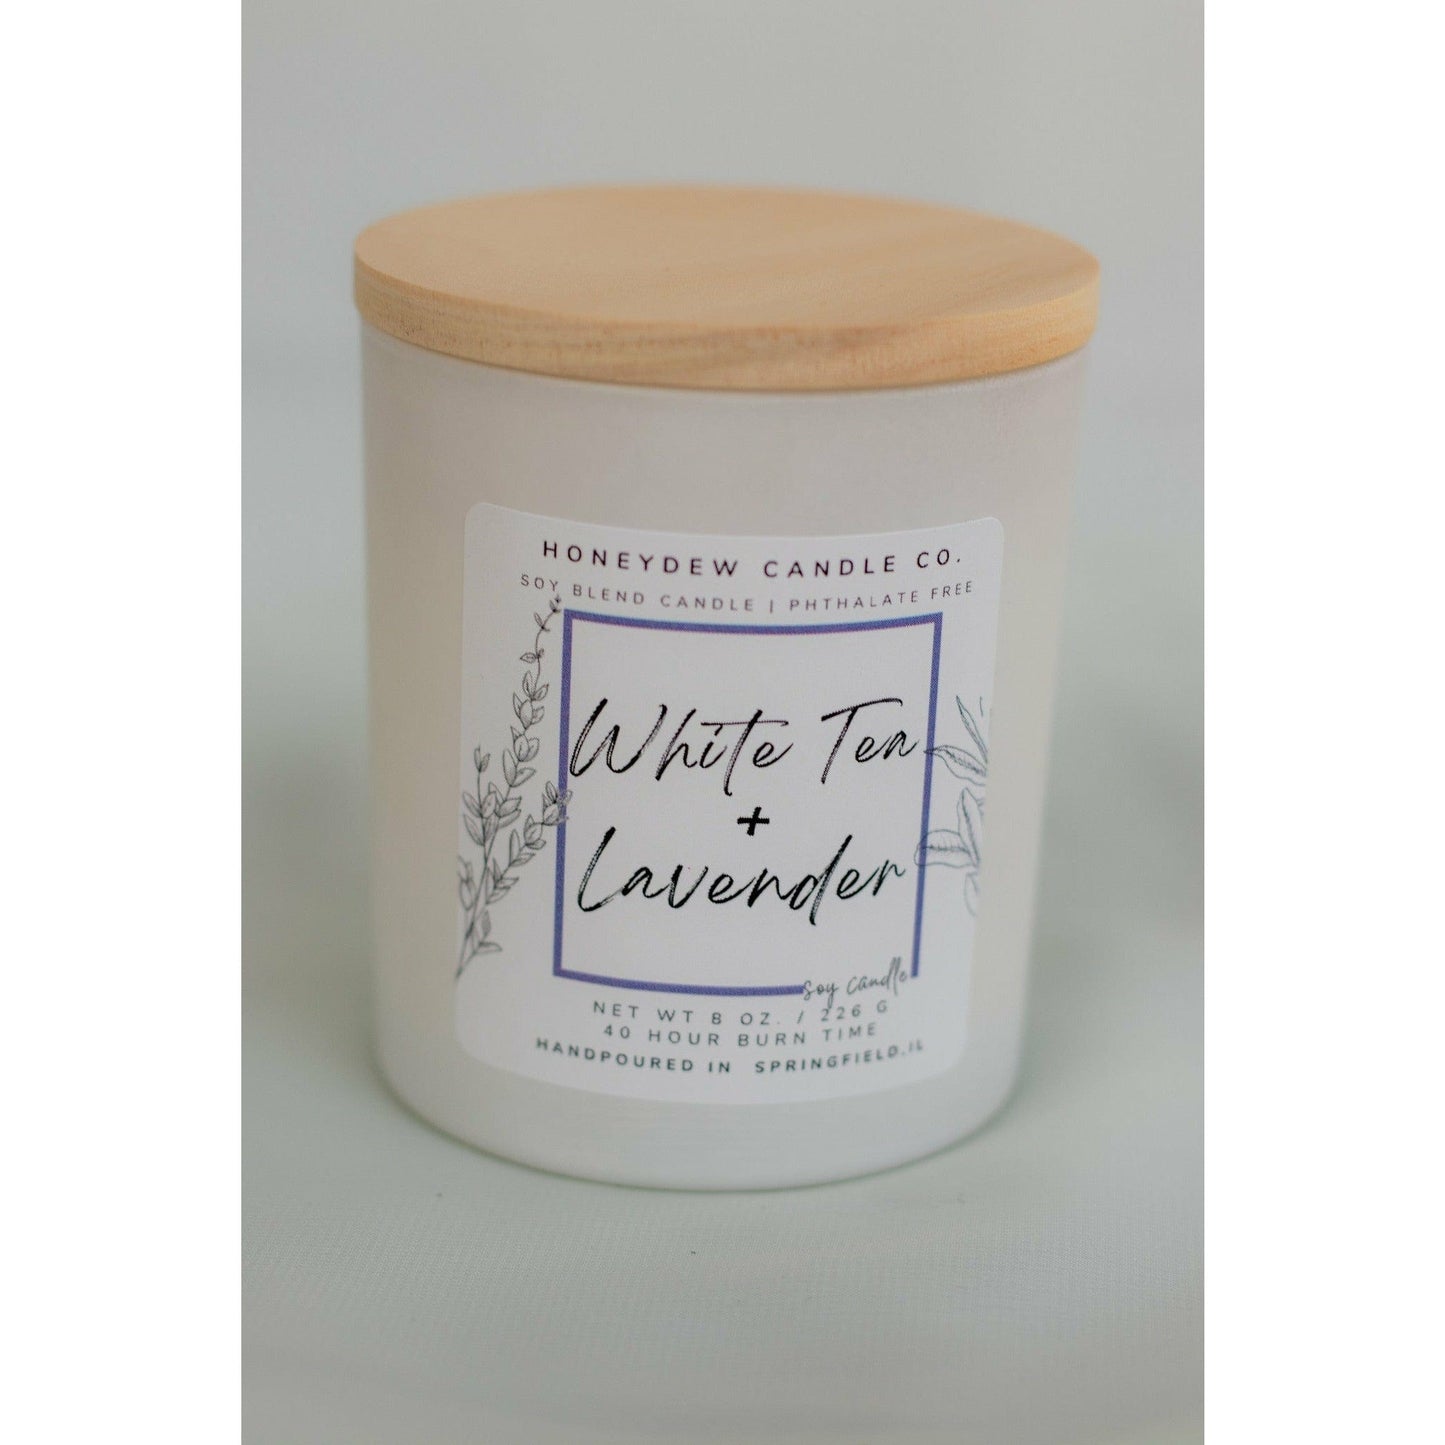 White Tea Lavender 10 oz Candle